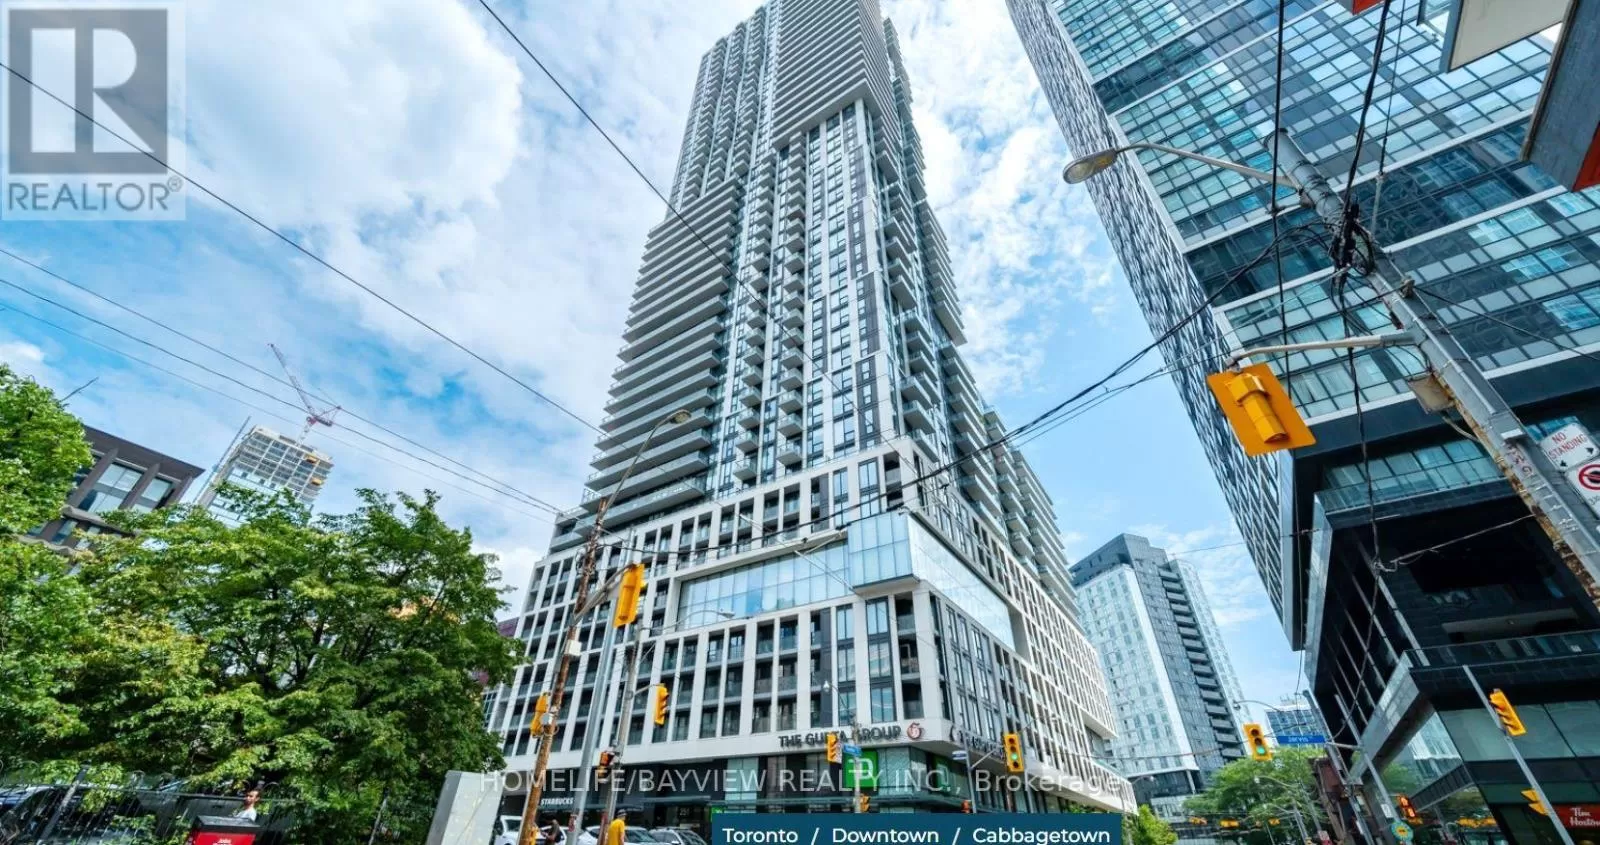 Apartment for rent: 2415 - 251 Jarvis Street, Toronto, Ontario M5B 0C3